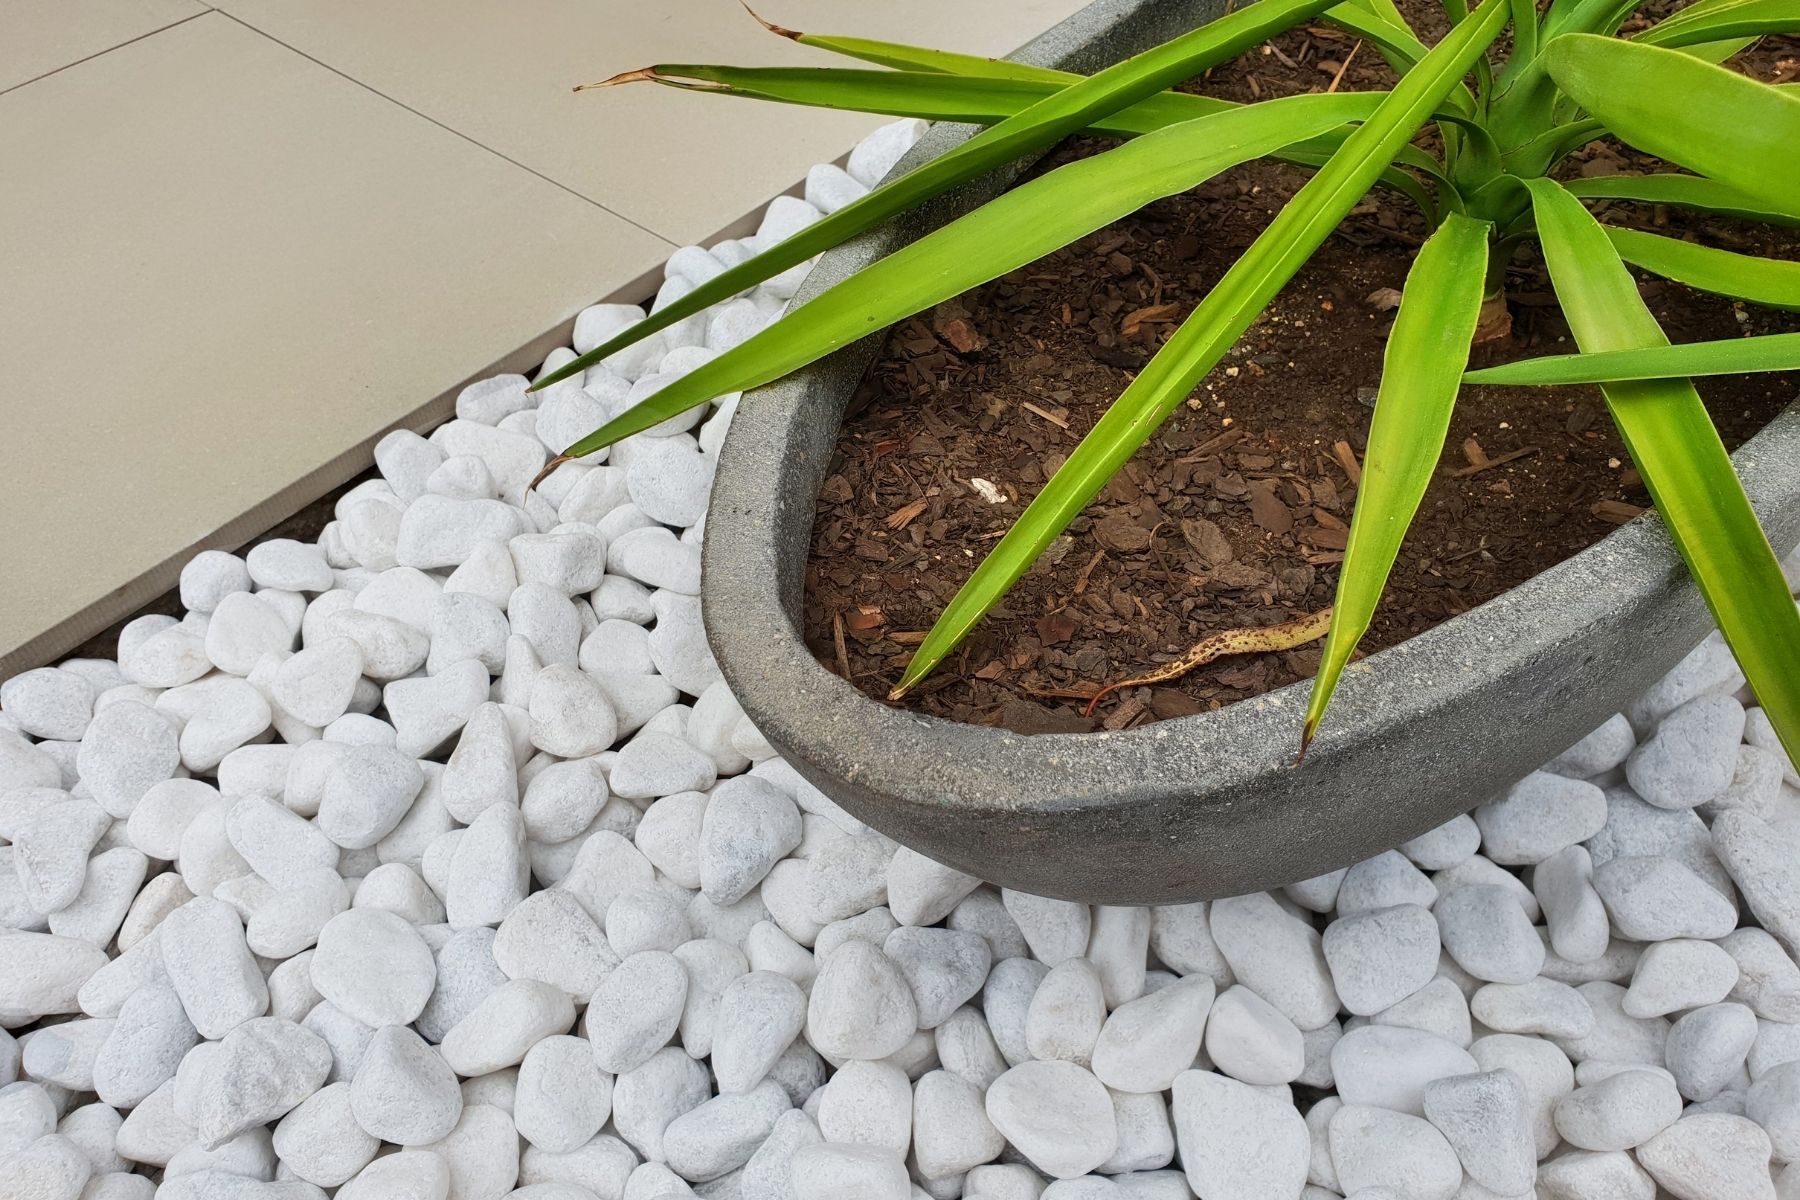 white pebbles under pot plant for garden decoration and drainage